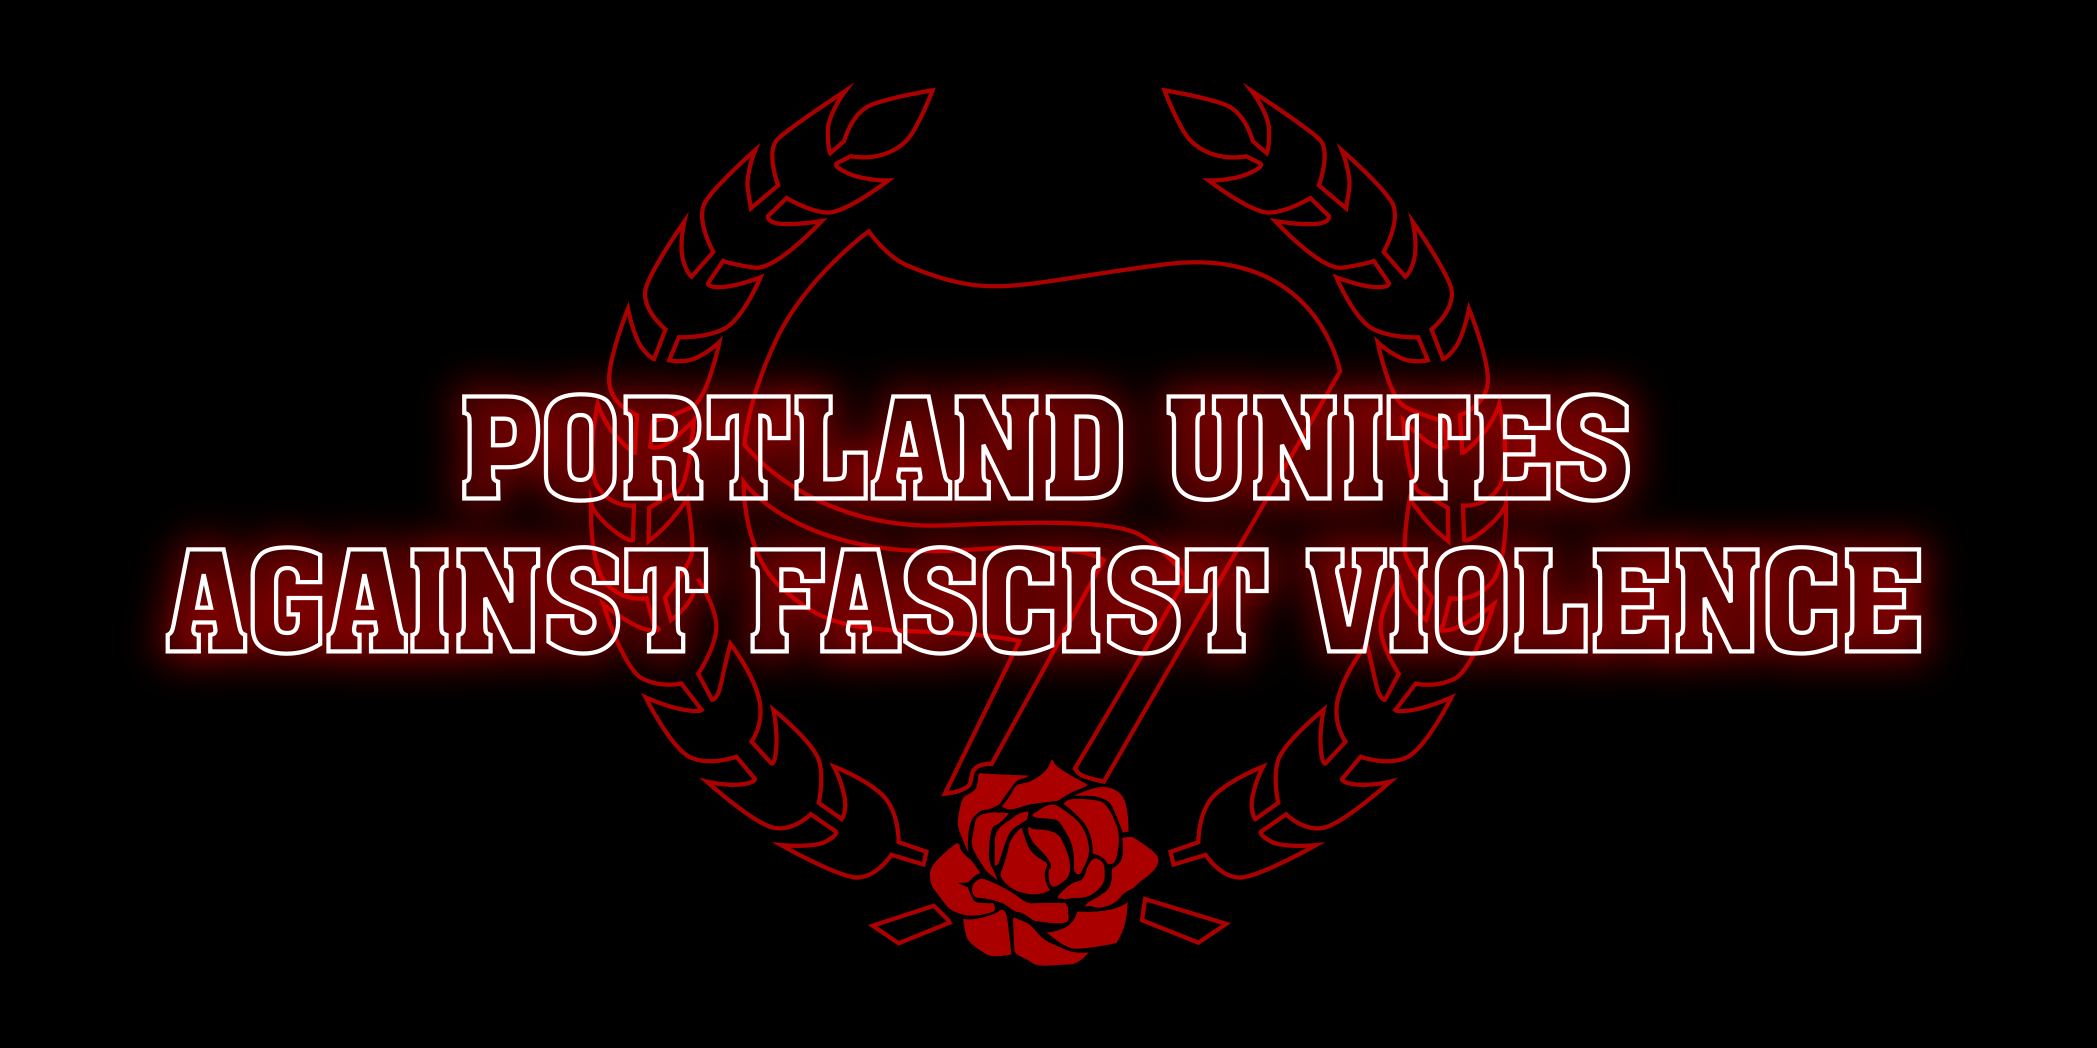 PORTLAND UNITES AGAINST FASCIST VIOLENCE